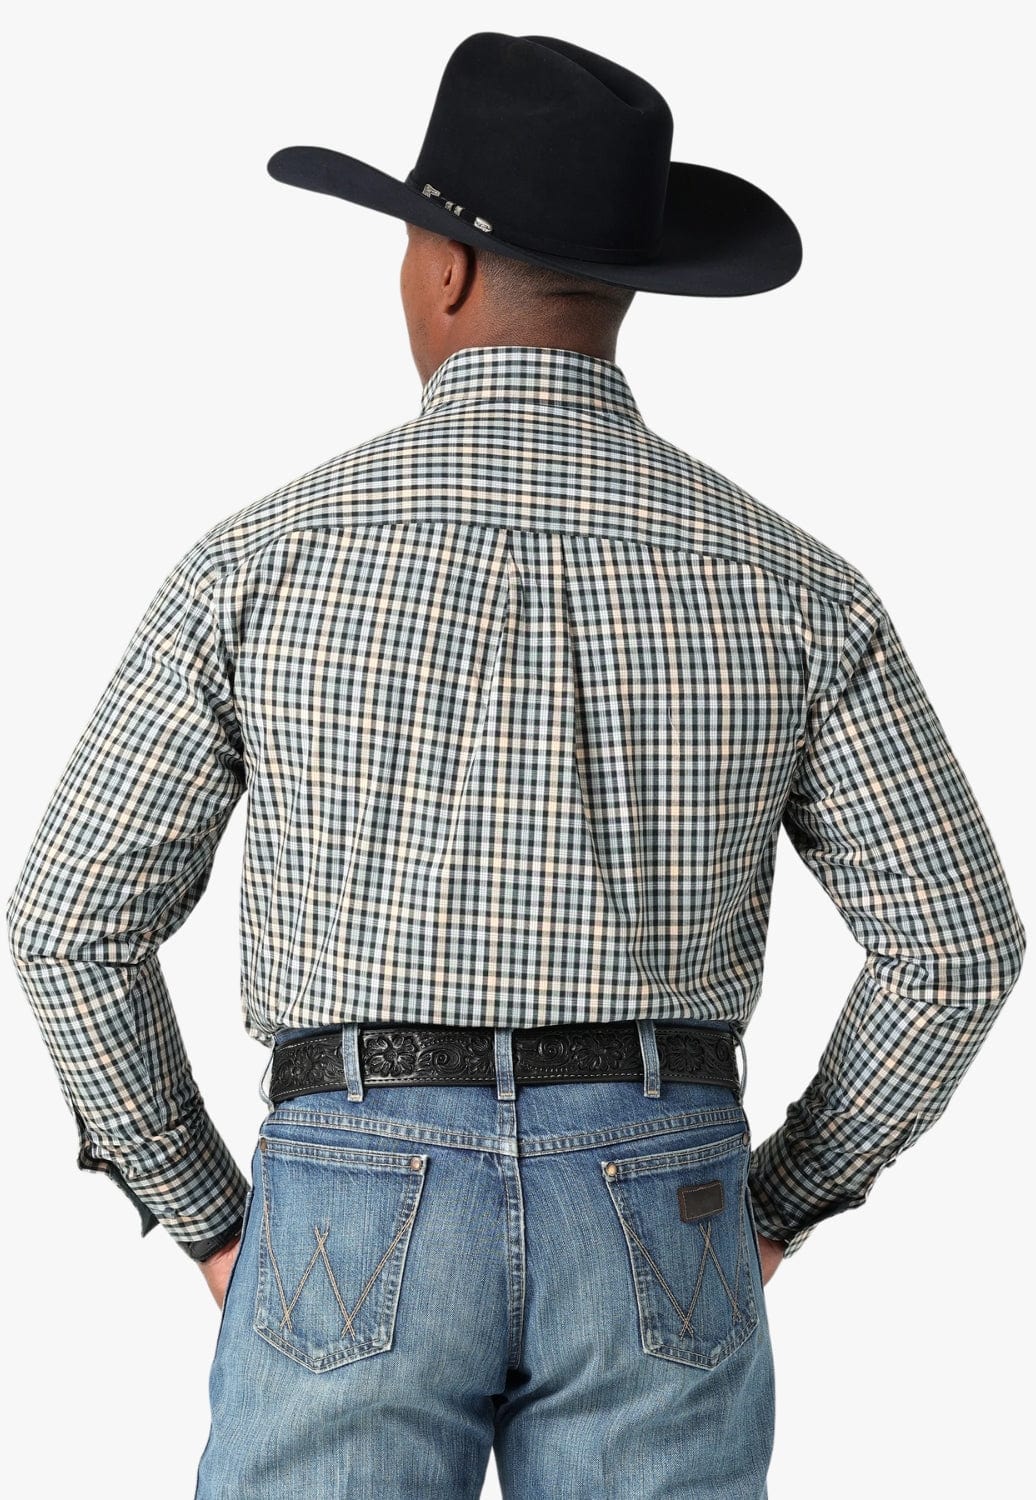 Wrangler Mens George Strait Long Sleeve Shirt - W. Titley & Co